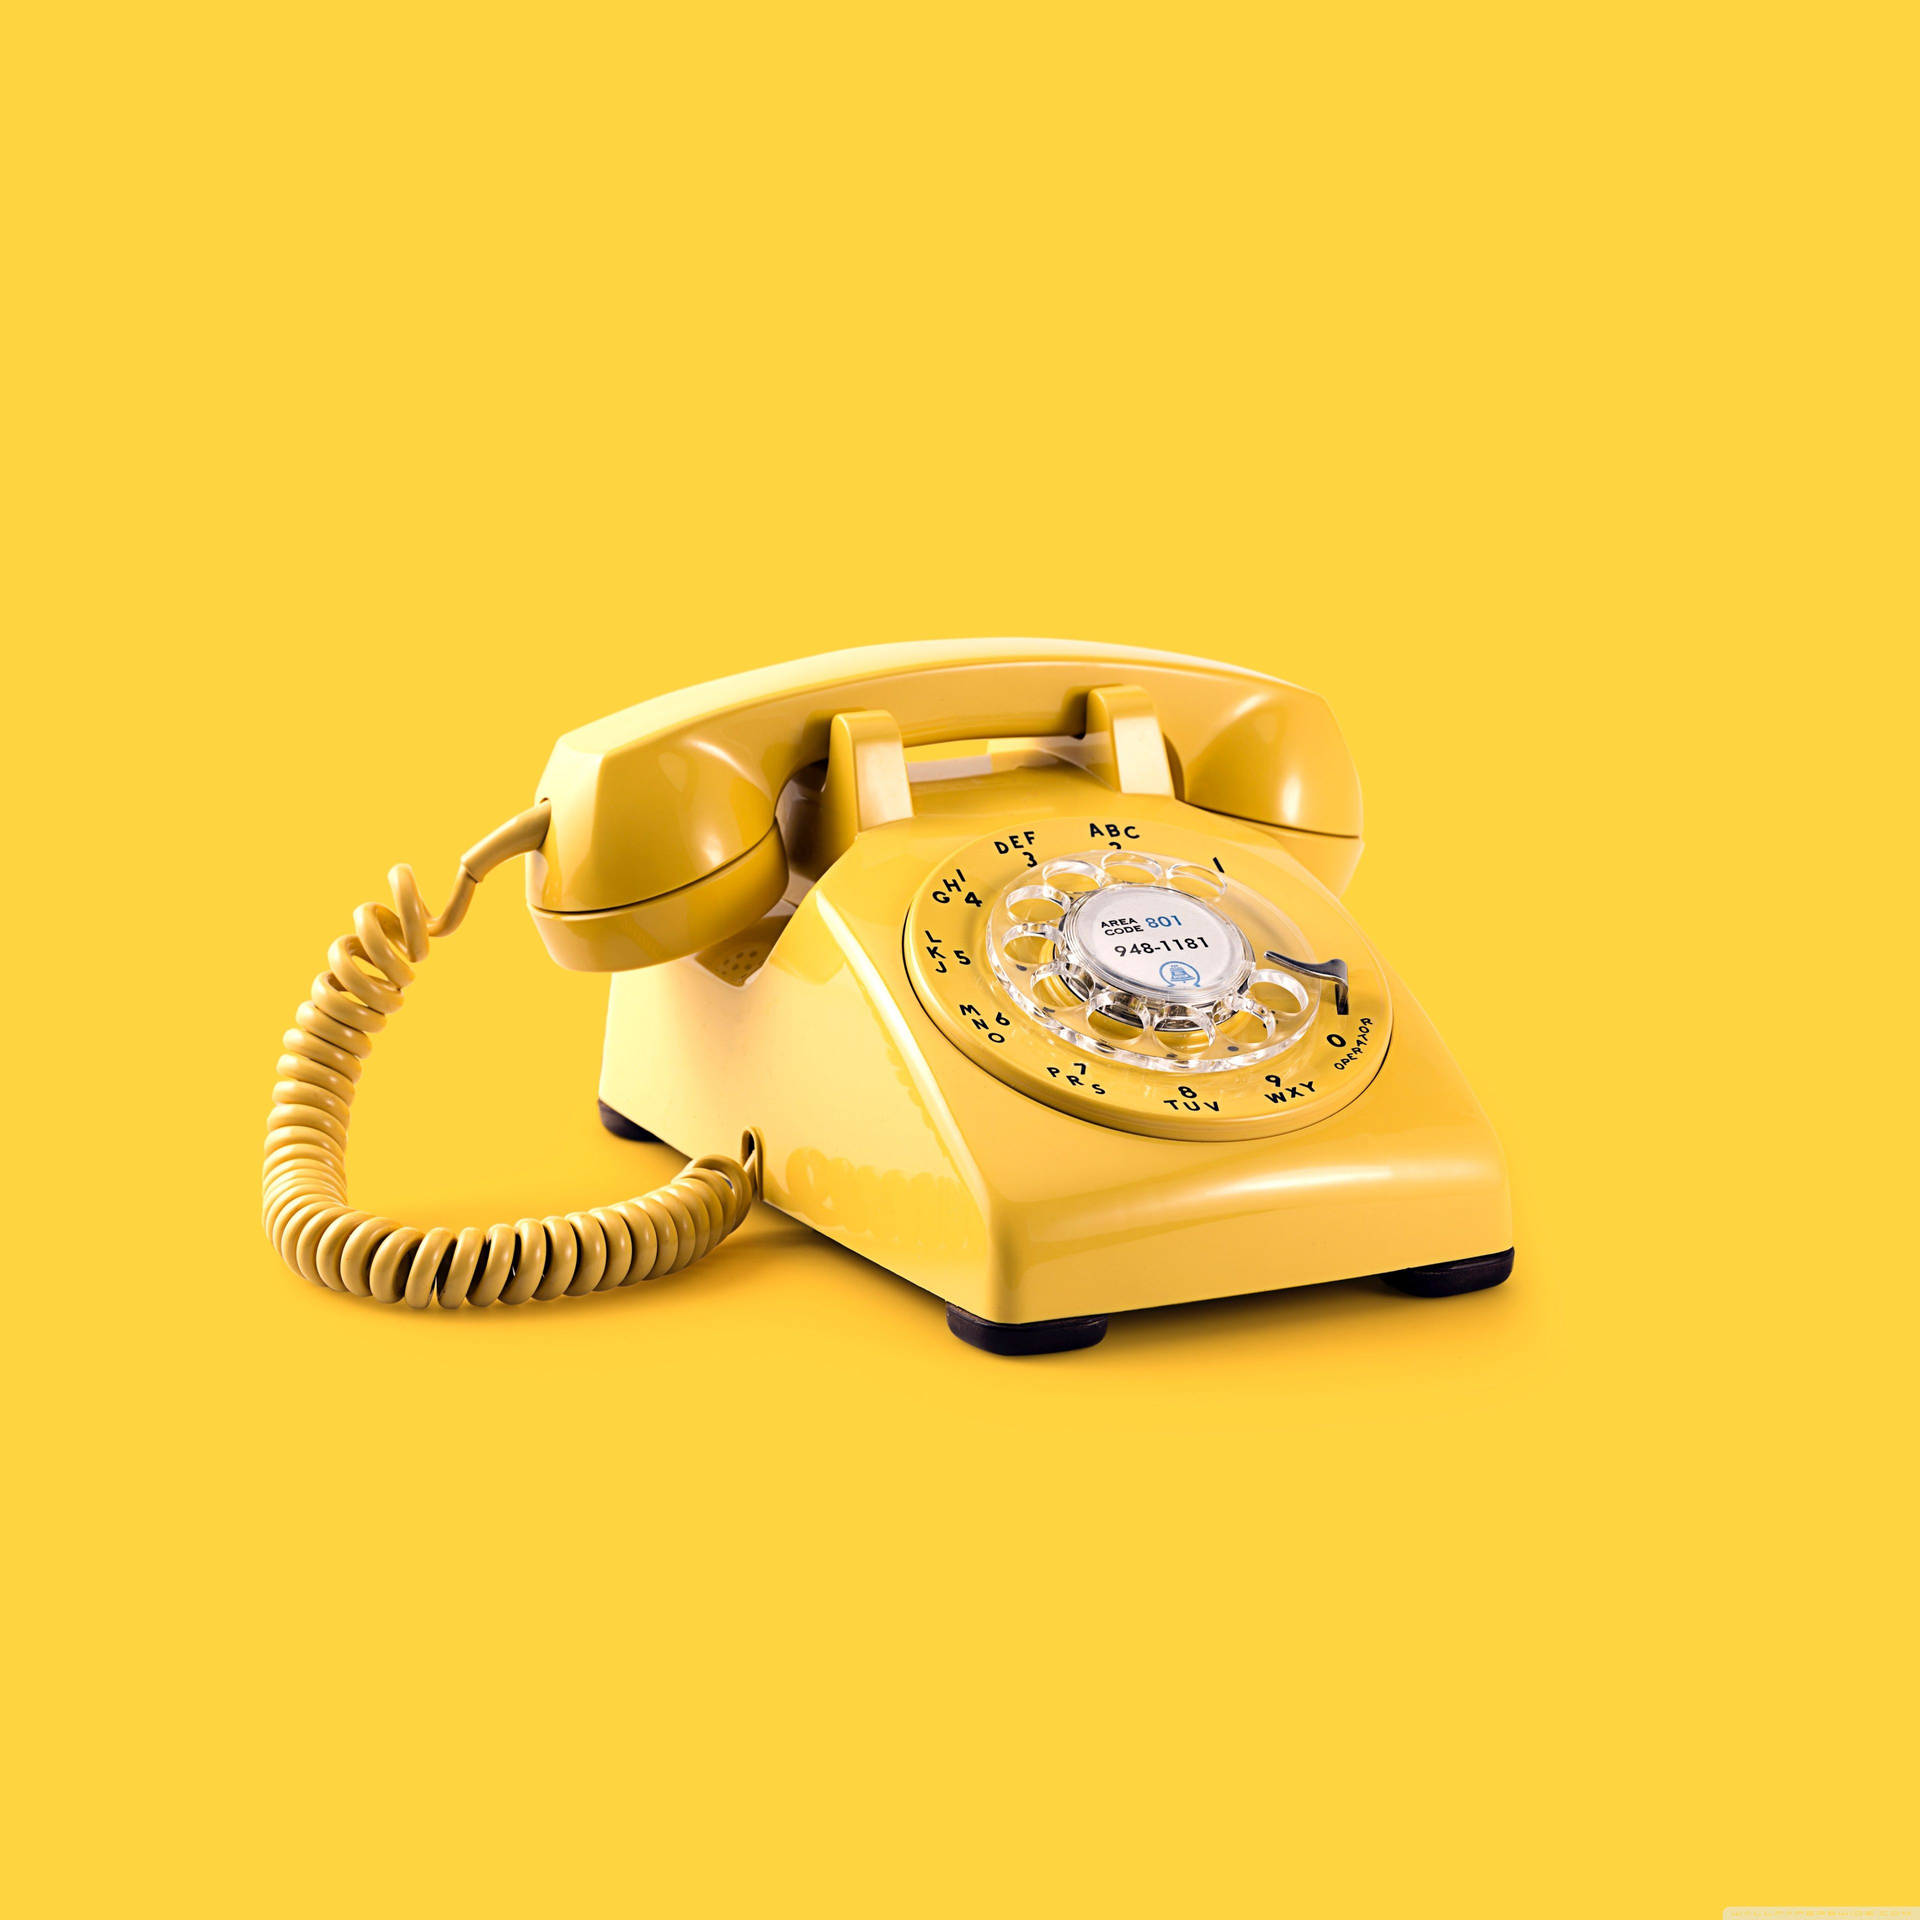 Aesthetic Retro Yellow Telephone Wallpaper